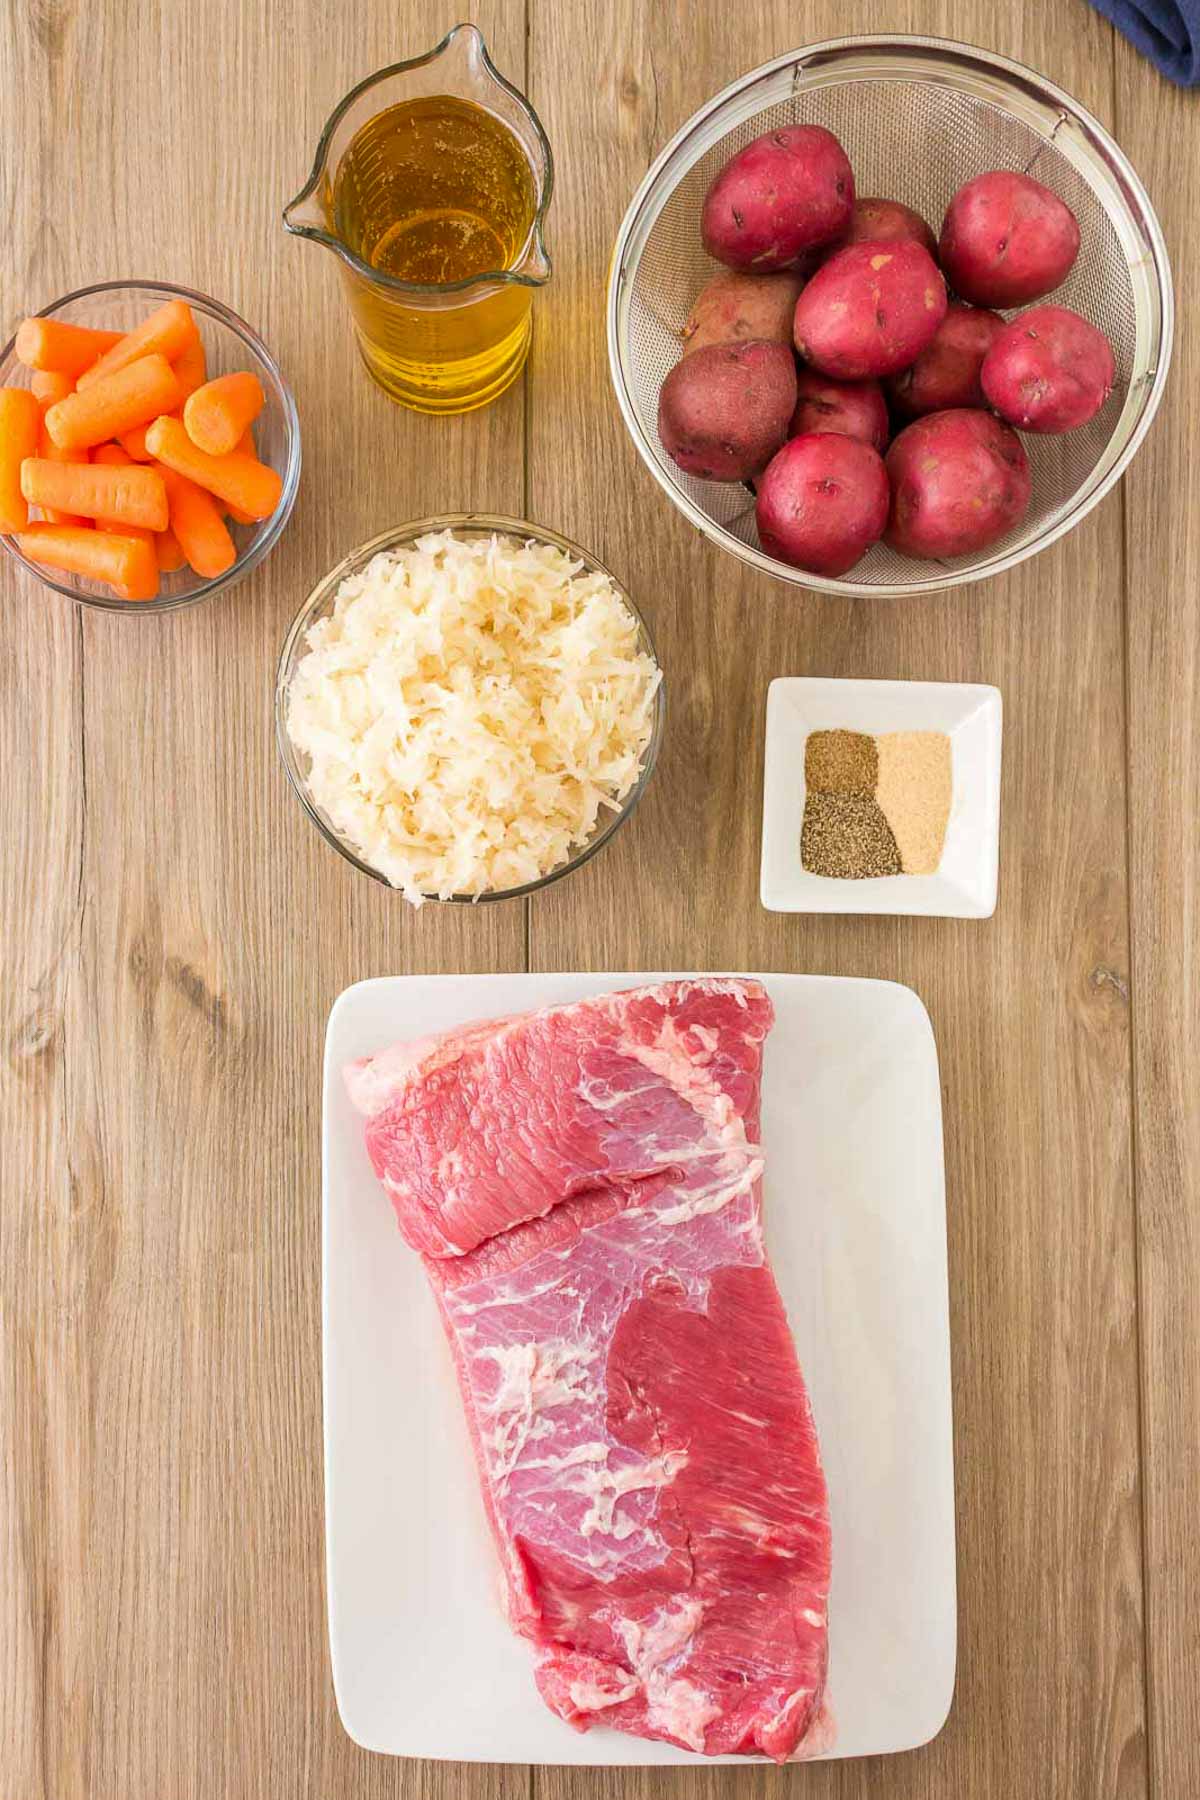 Ingredients for a corned beef recipe in bowls- corned beef brisket, sauerkraut, carrots, potatoes, beer, and seasonings.